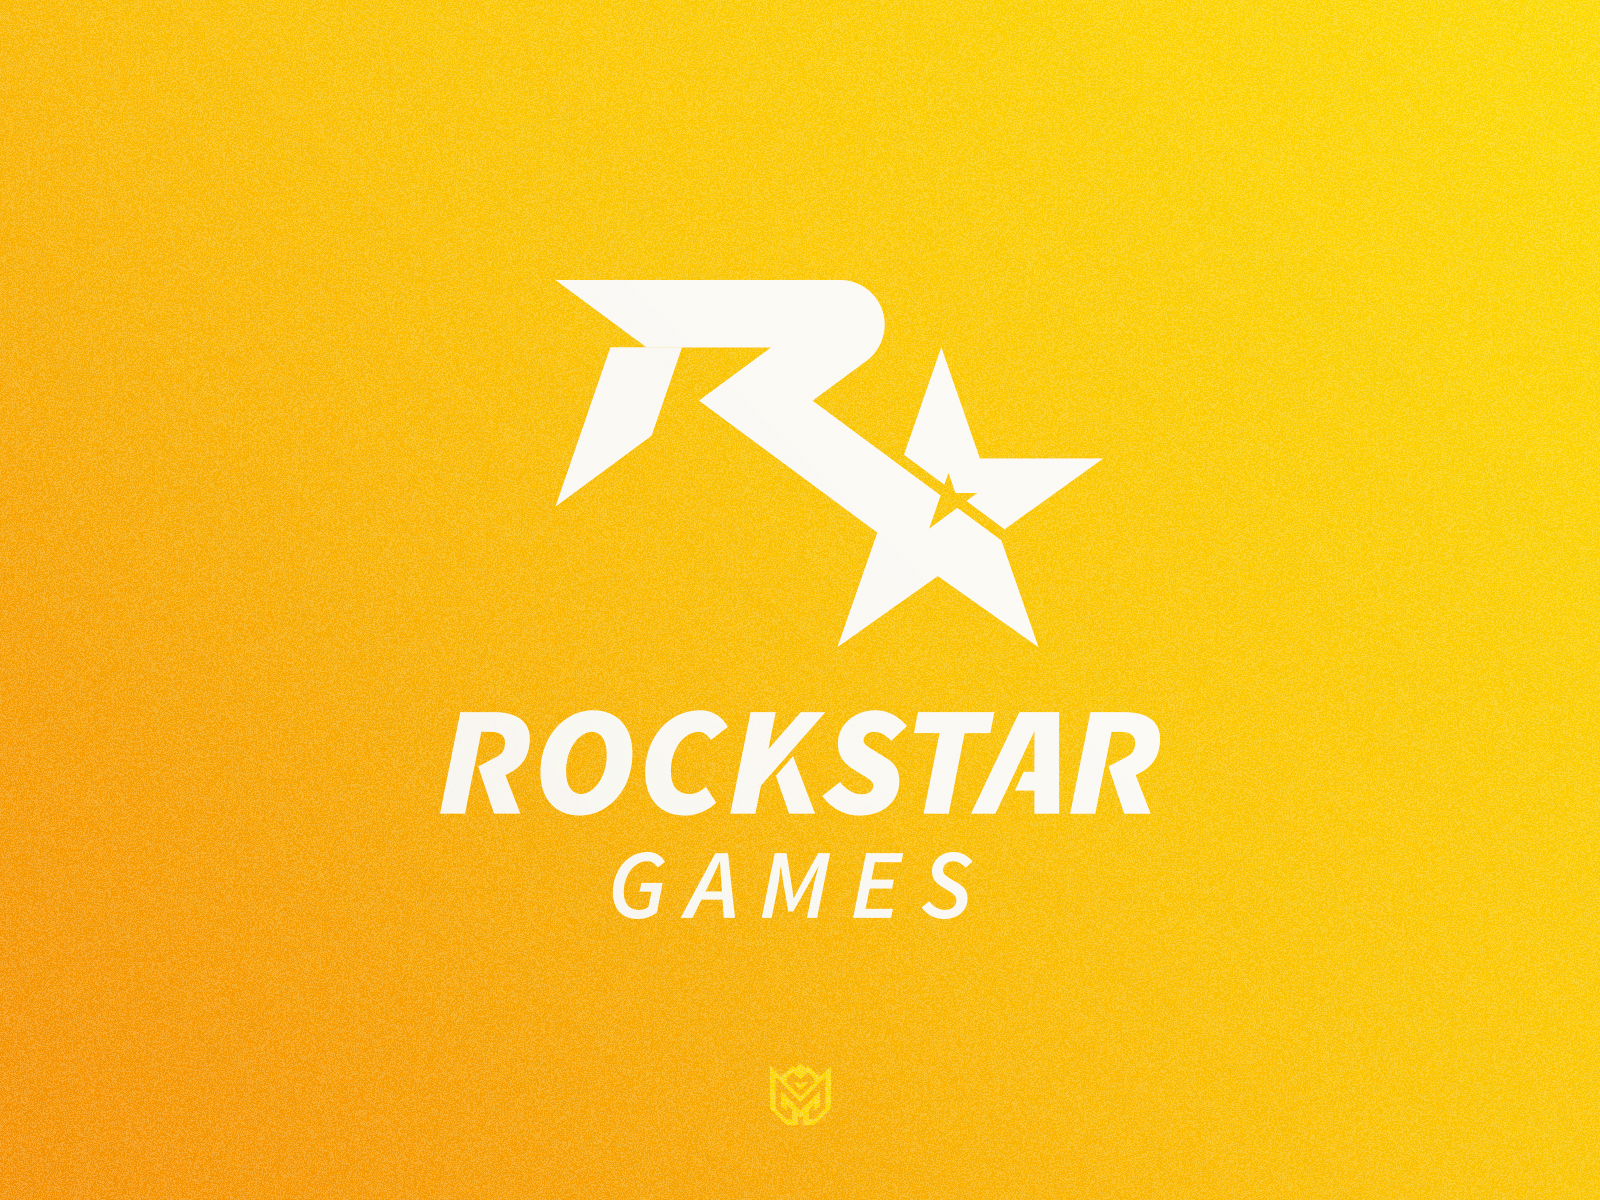 Rockstar Games Logo Redesign by DrippinDigital on Dribbble